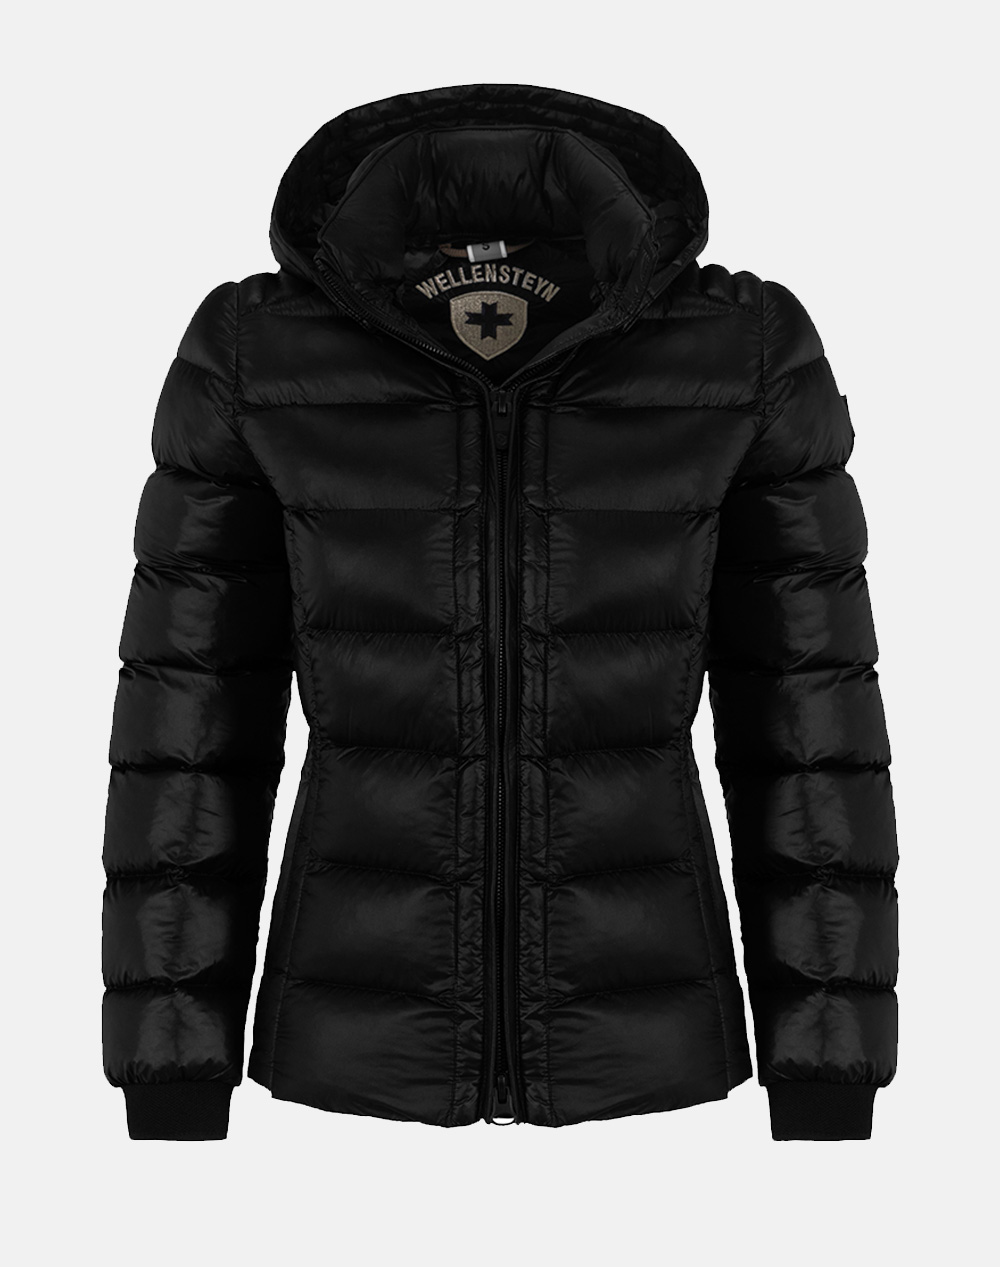 WELLENSTEYN Jacket HICLS-1001-Schwarz Black